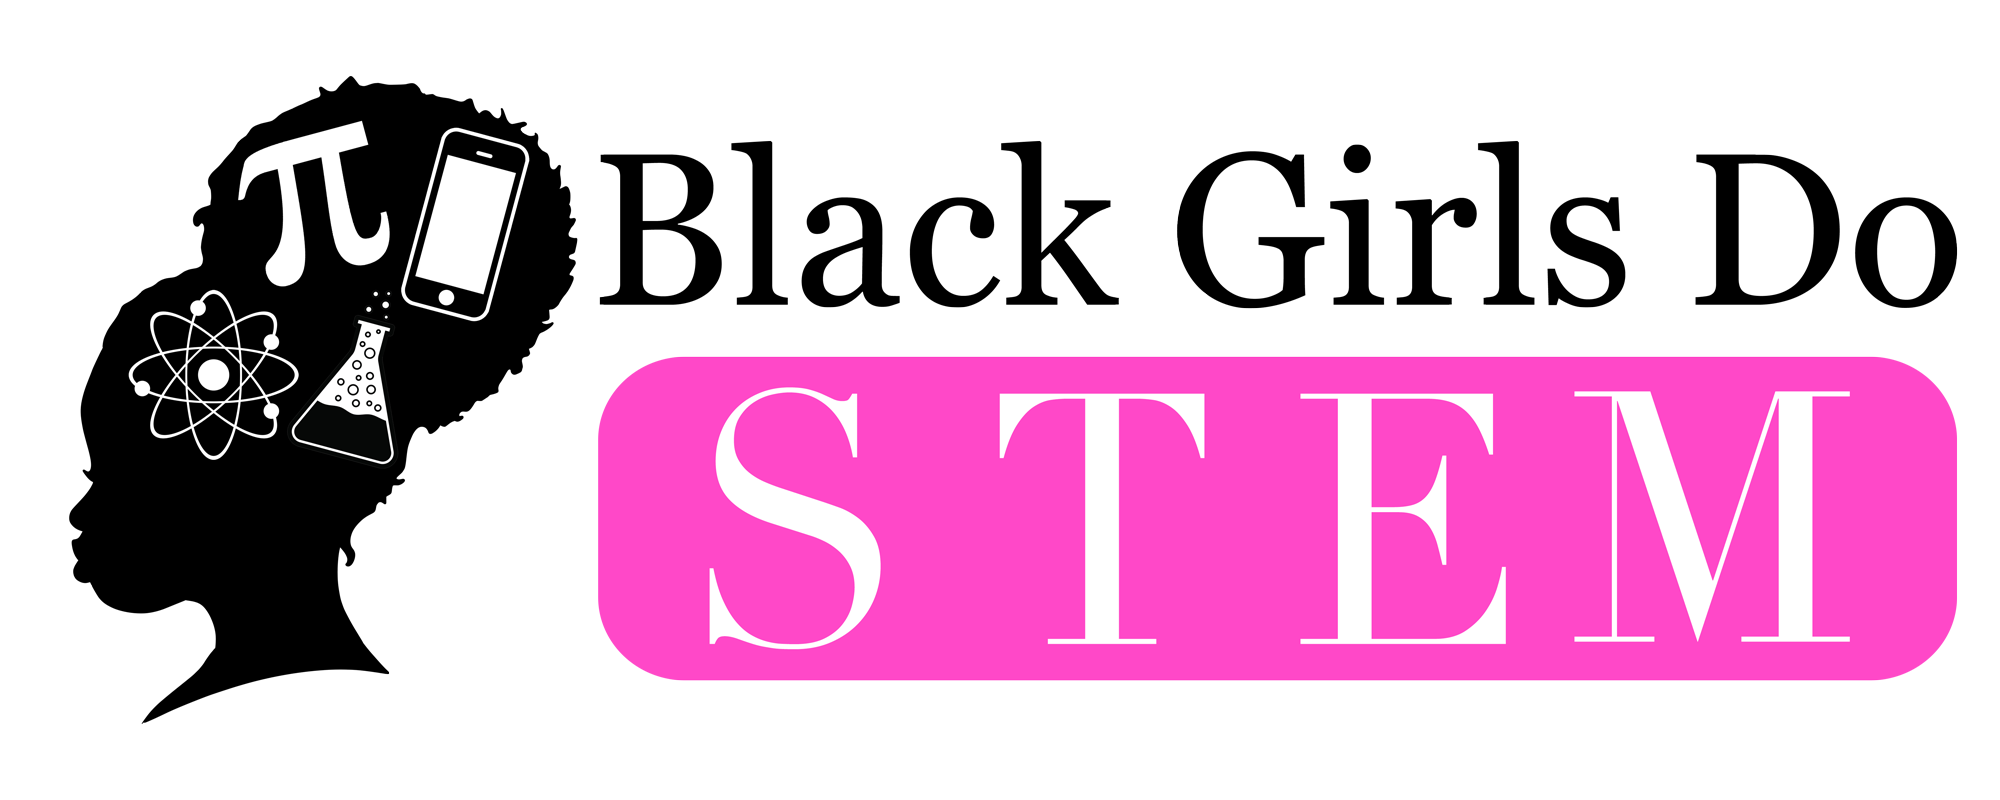 Black Girls do STEM logo -side profile of girl with STEM symbols